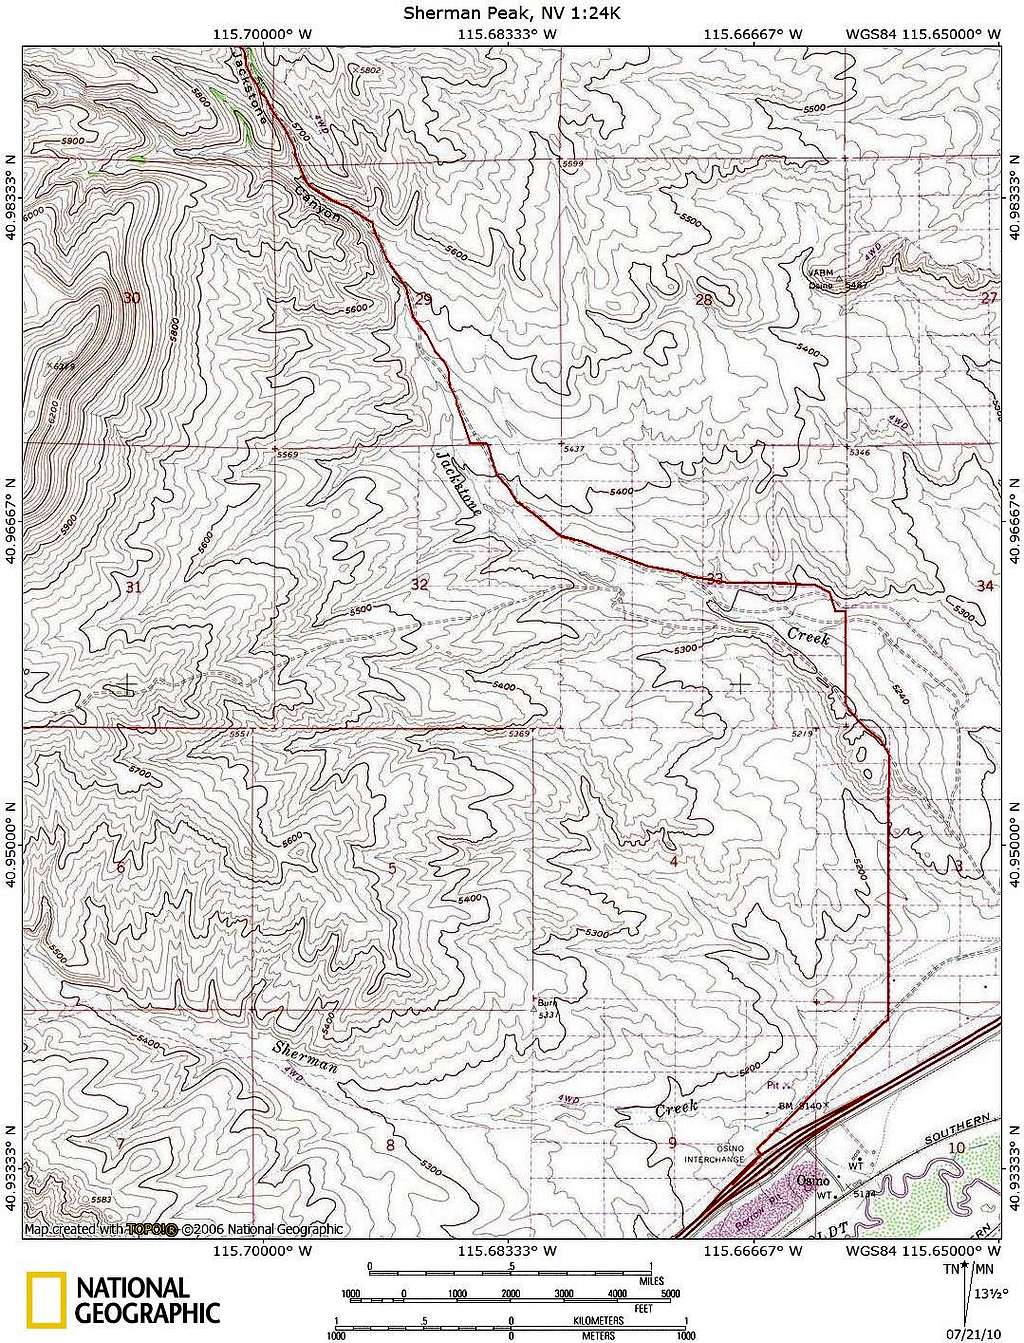 Sherman Peak access route (1/2)